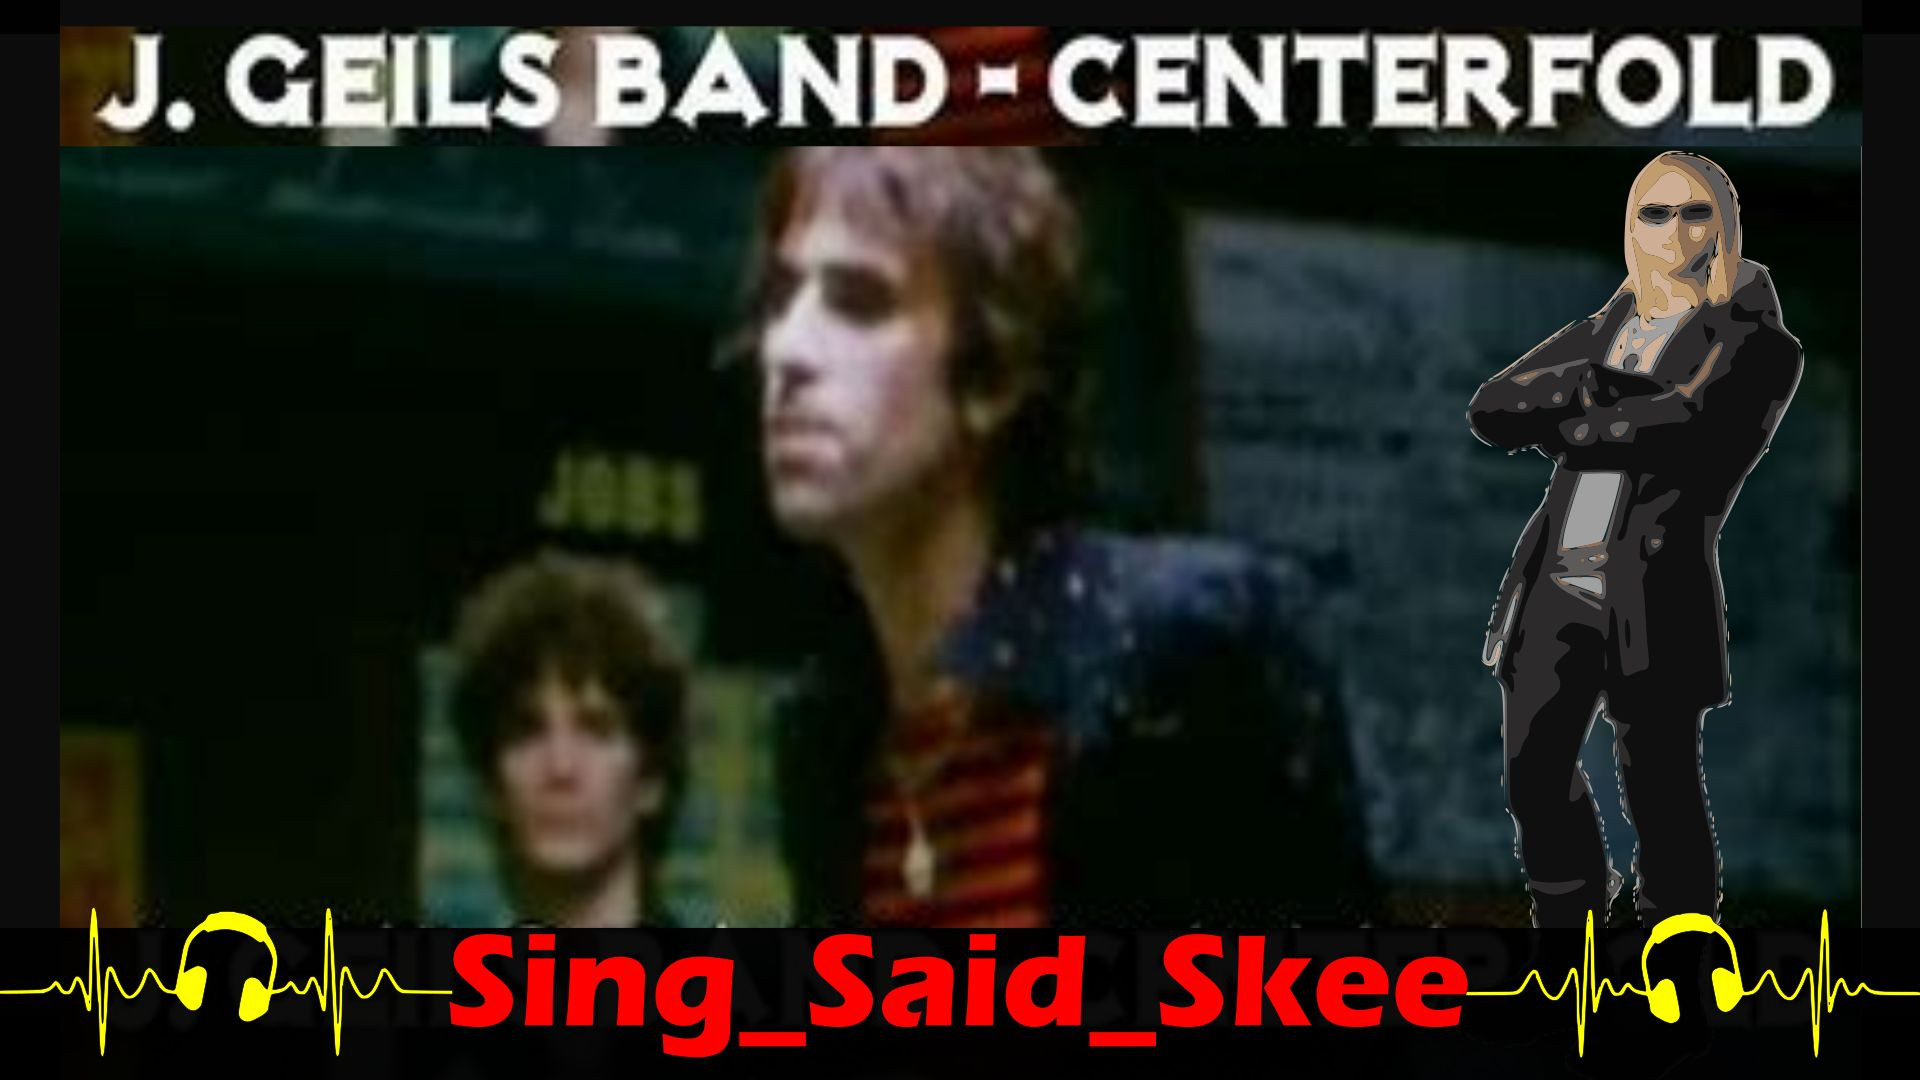 ⁣Centerfold - J. Geils Band - Sing_Said_Skee